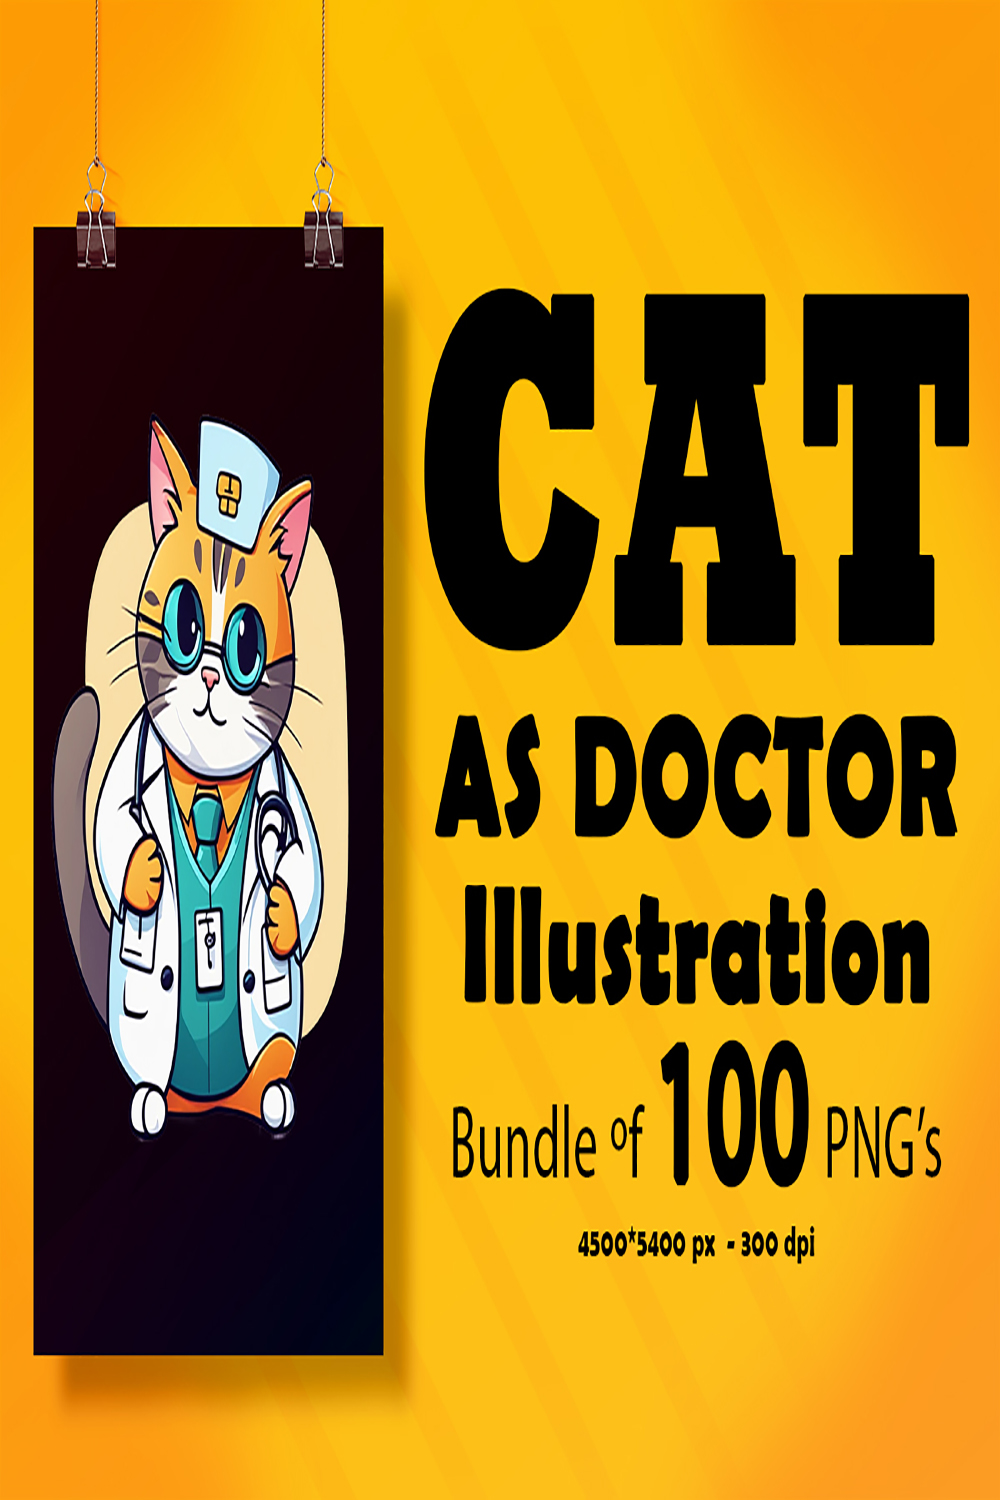 Cat as Doctor Illustration for POD 100 Clipart Bundle pinterest preview image.